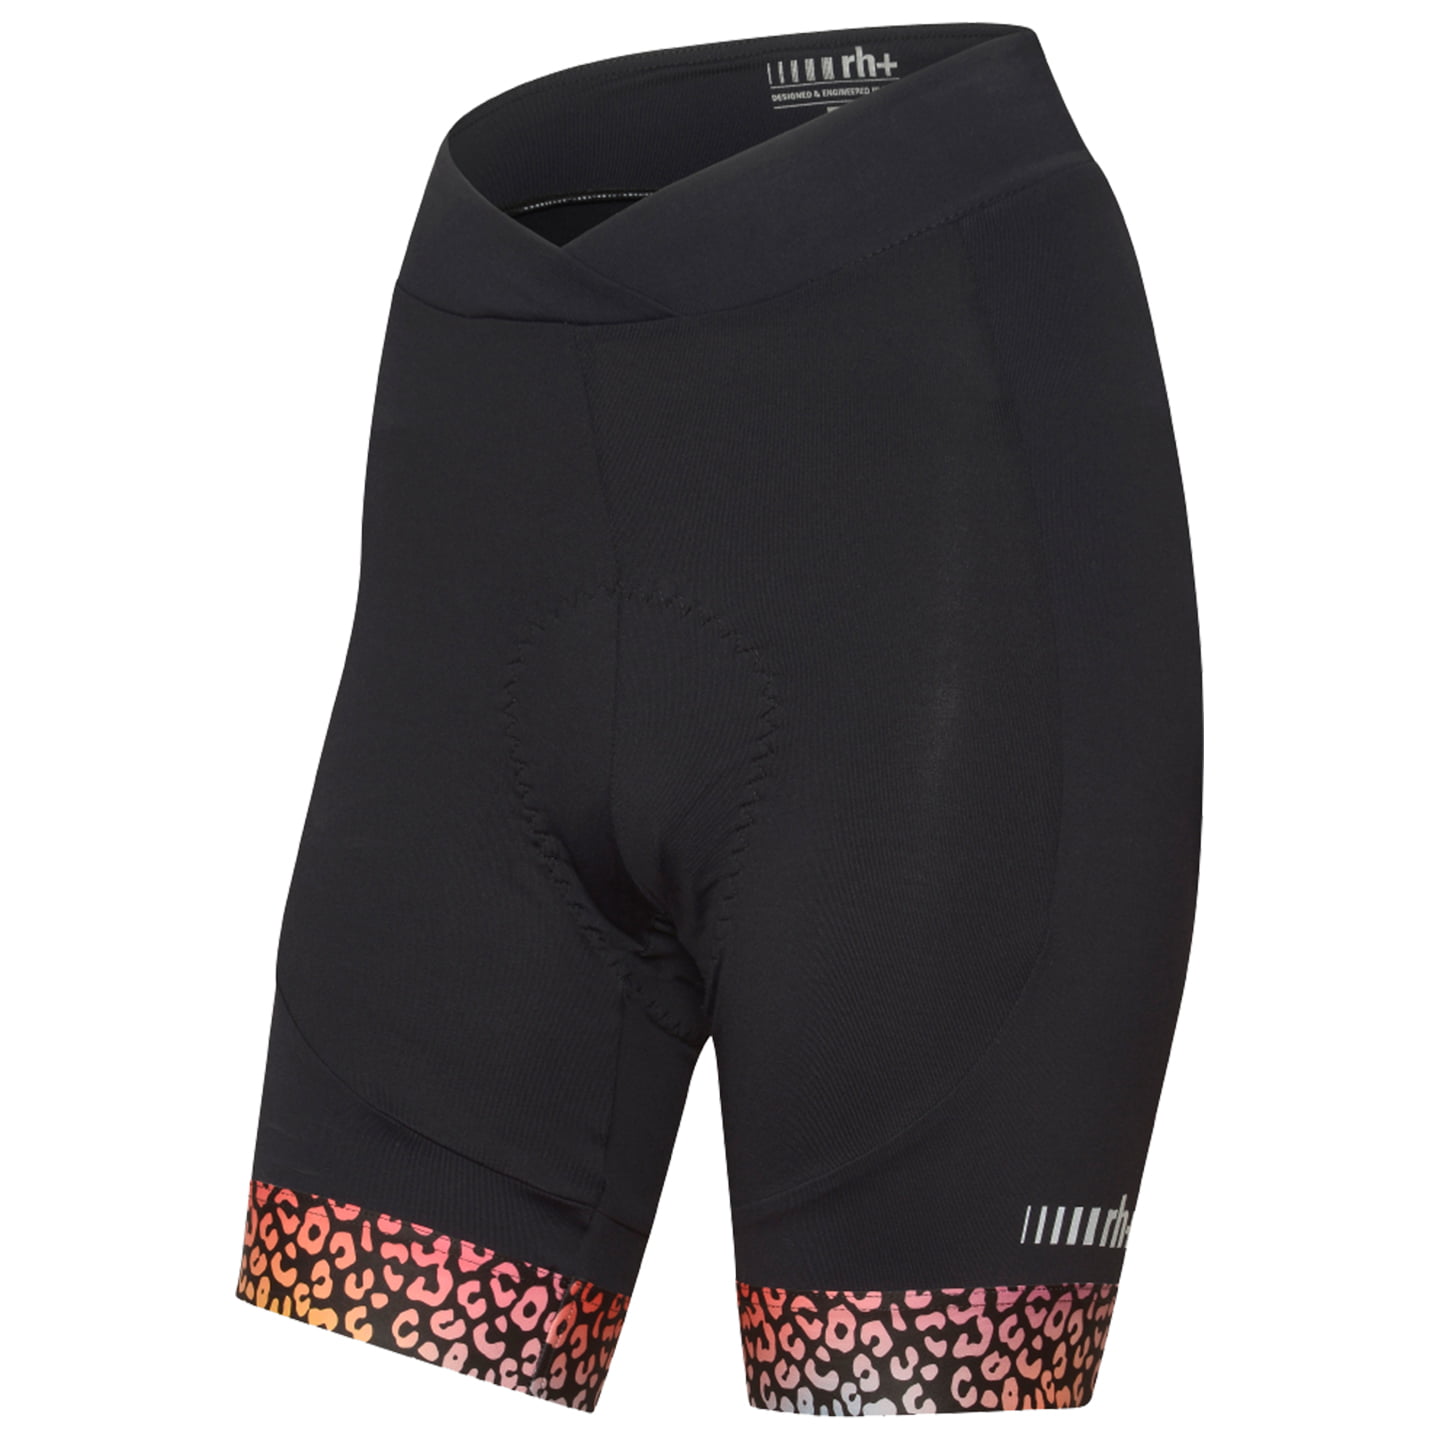 RH+ New Elite Women’s Cycling Shorts Women’s Cycling Shorts, size S, Cycle trousers, Cycle clothing